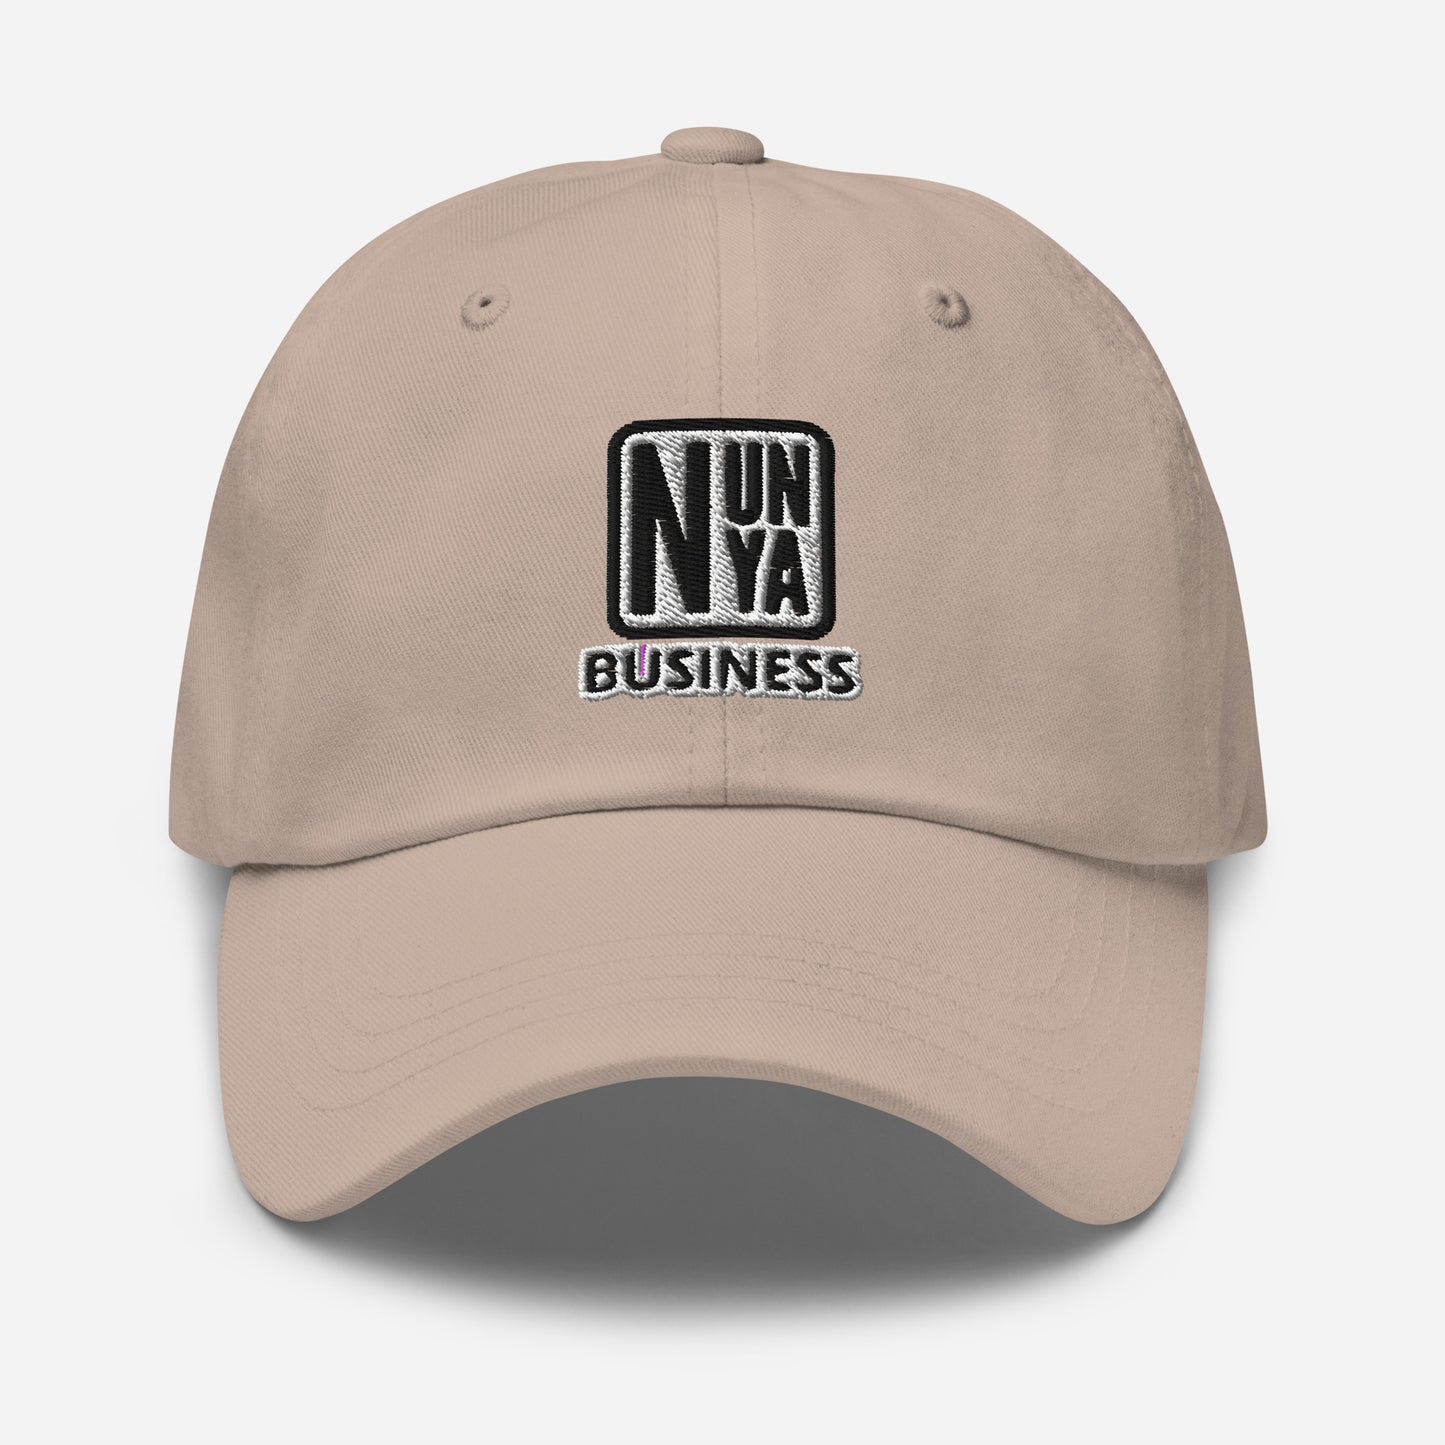 Nunya Business Dad hat